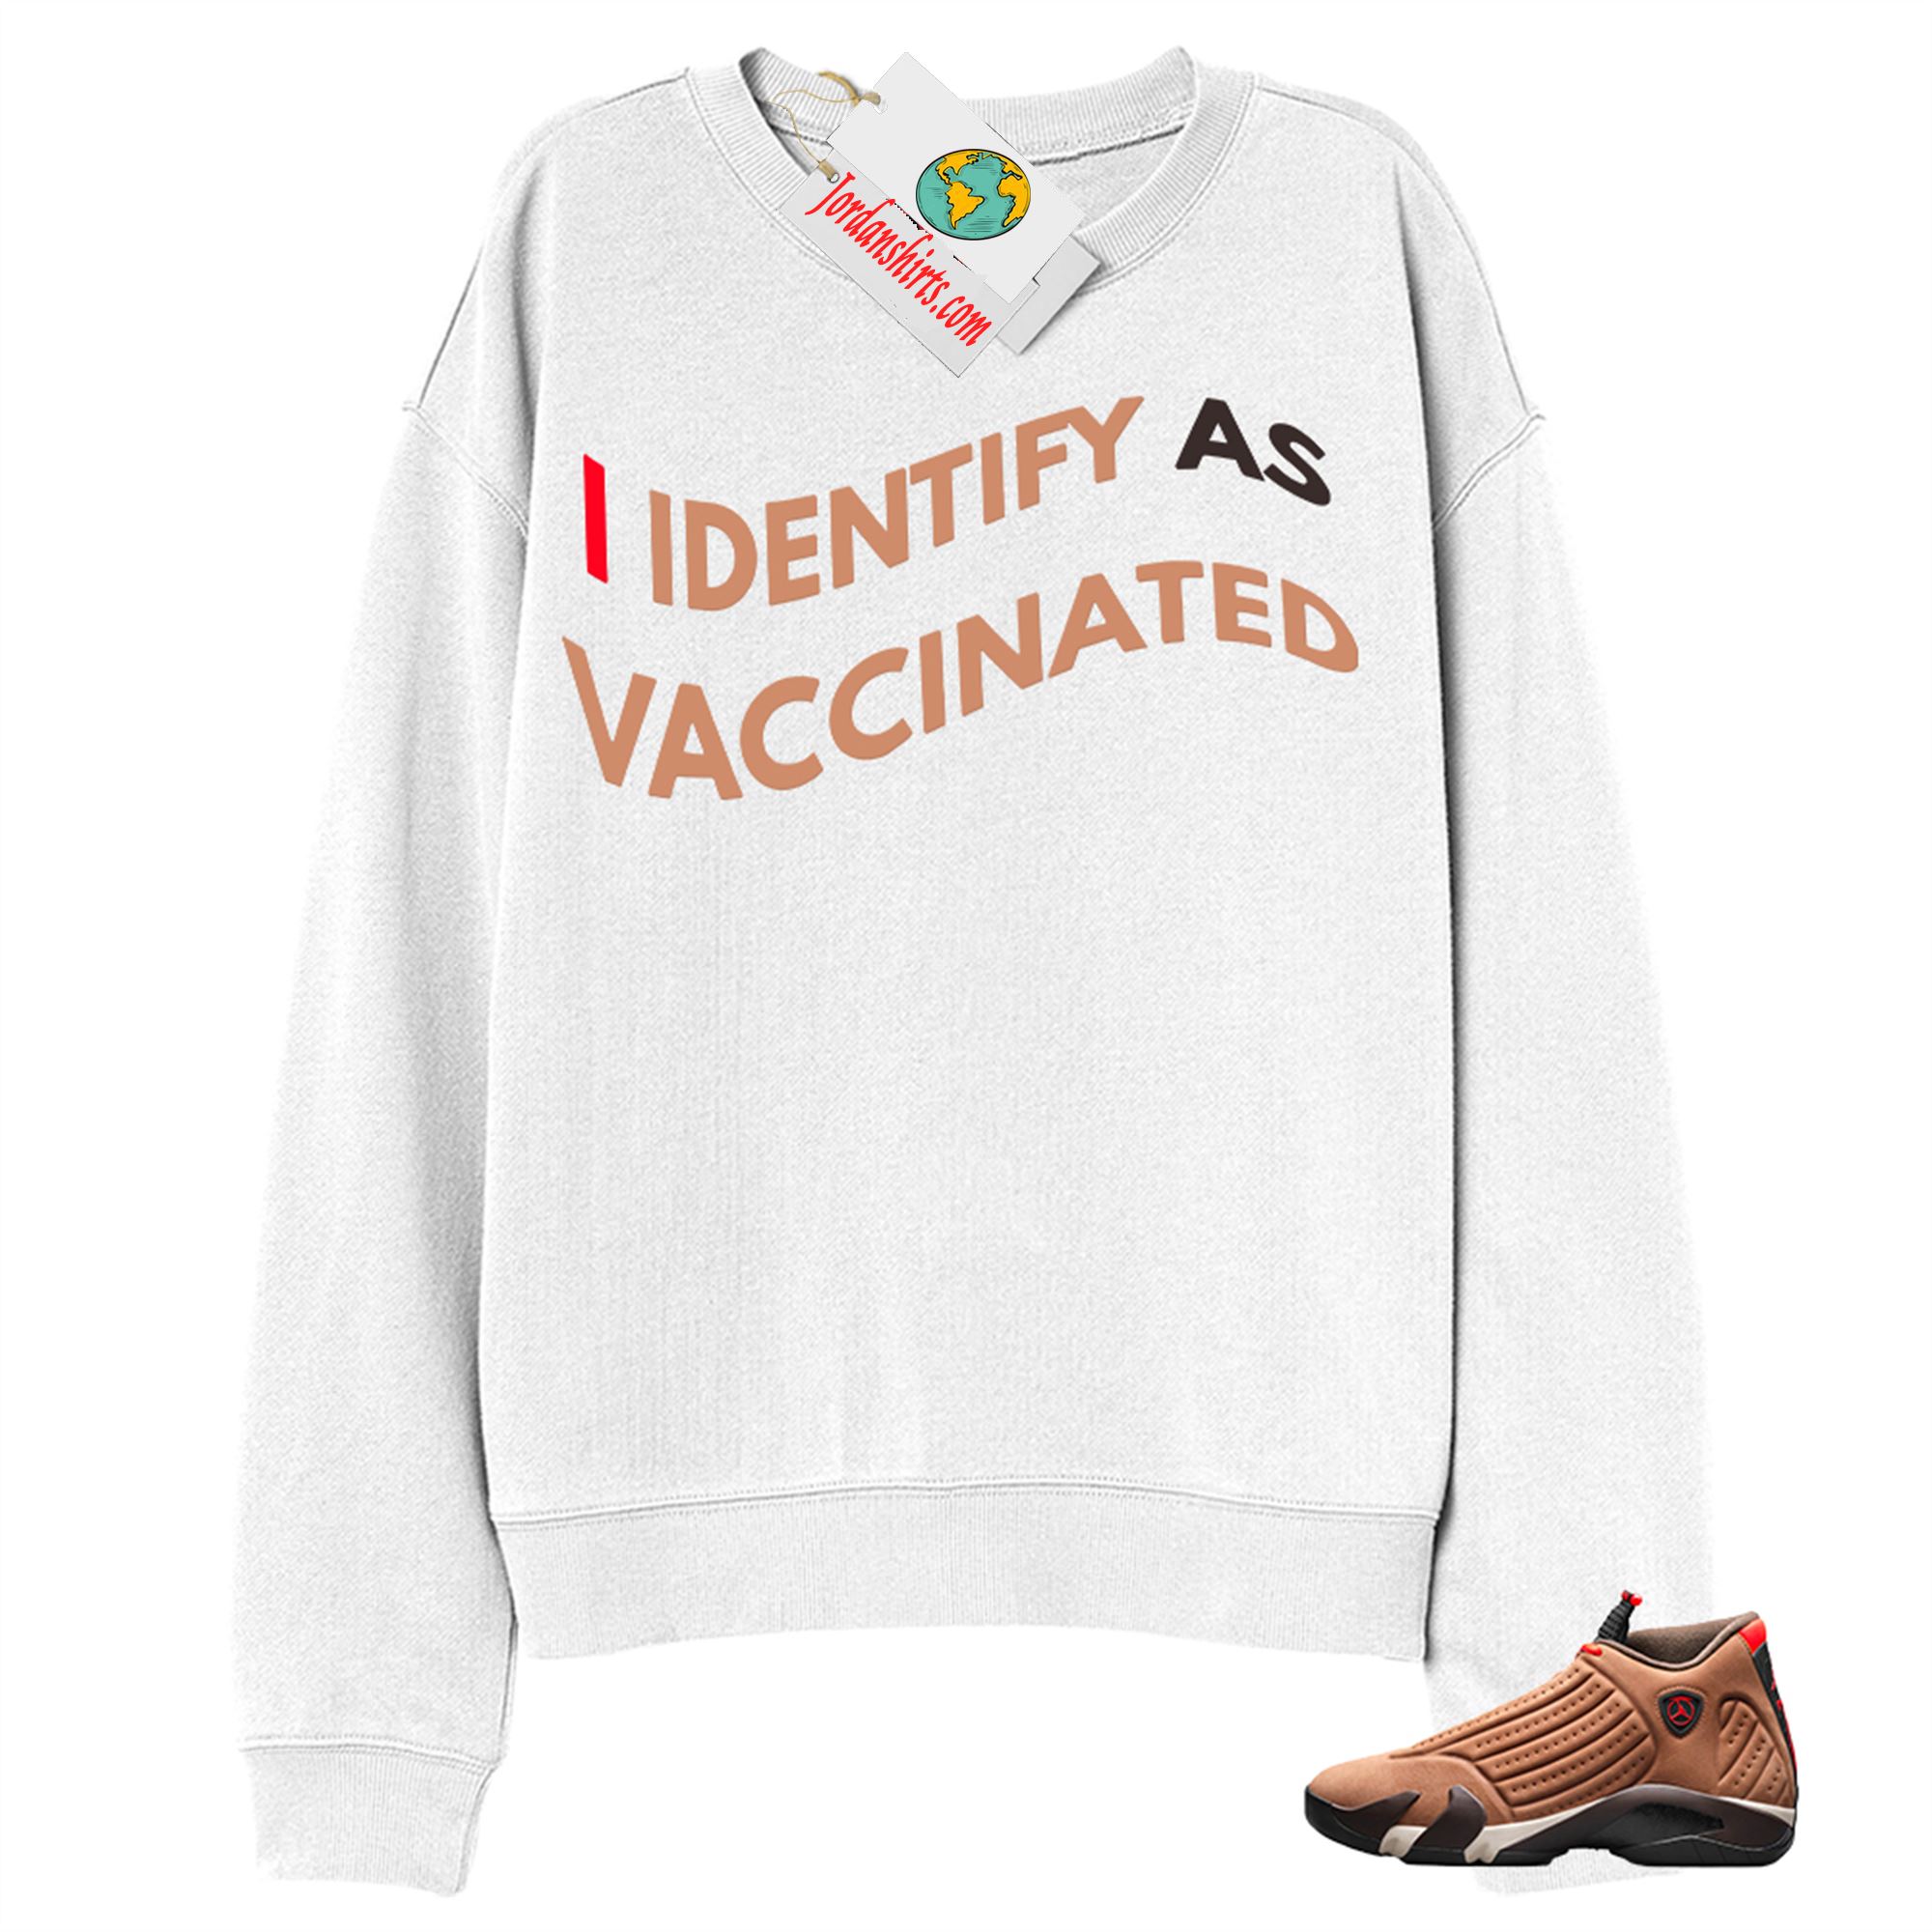 Jordan 14 Sweatshirt, I Identify As Vaccinated White Sweatshirt Air Jordan 14 Winterized 14s Full Size Up To 5xl